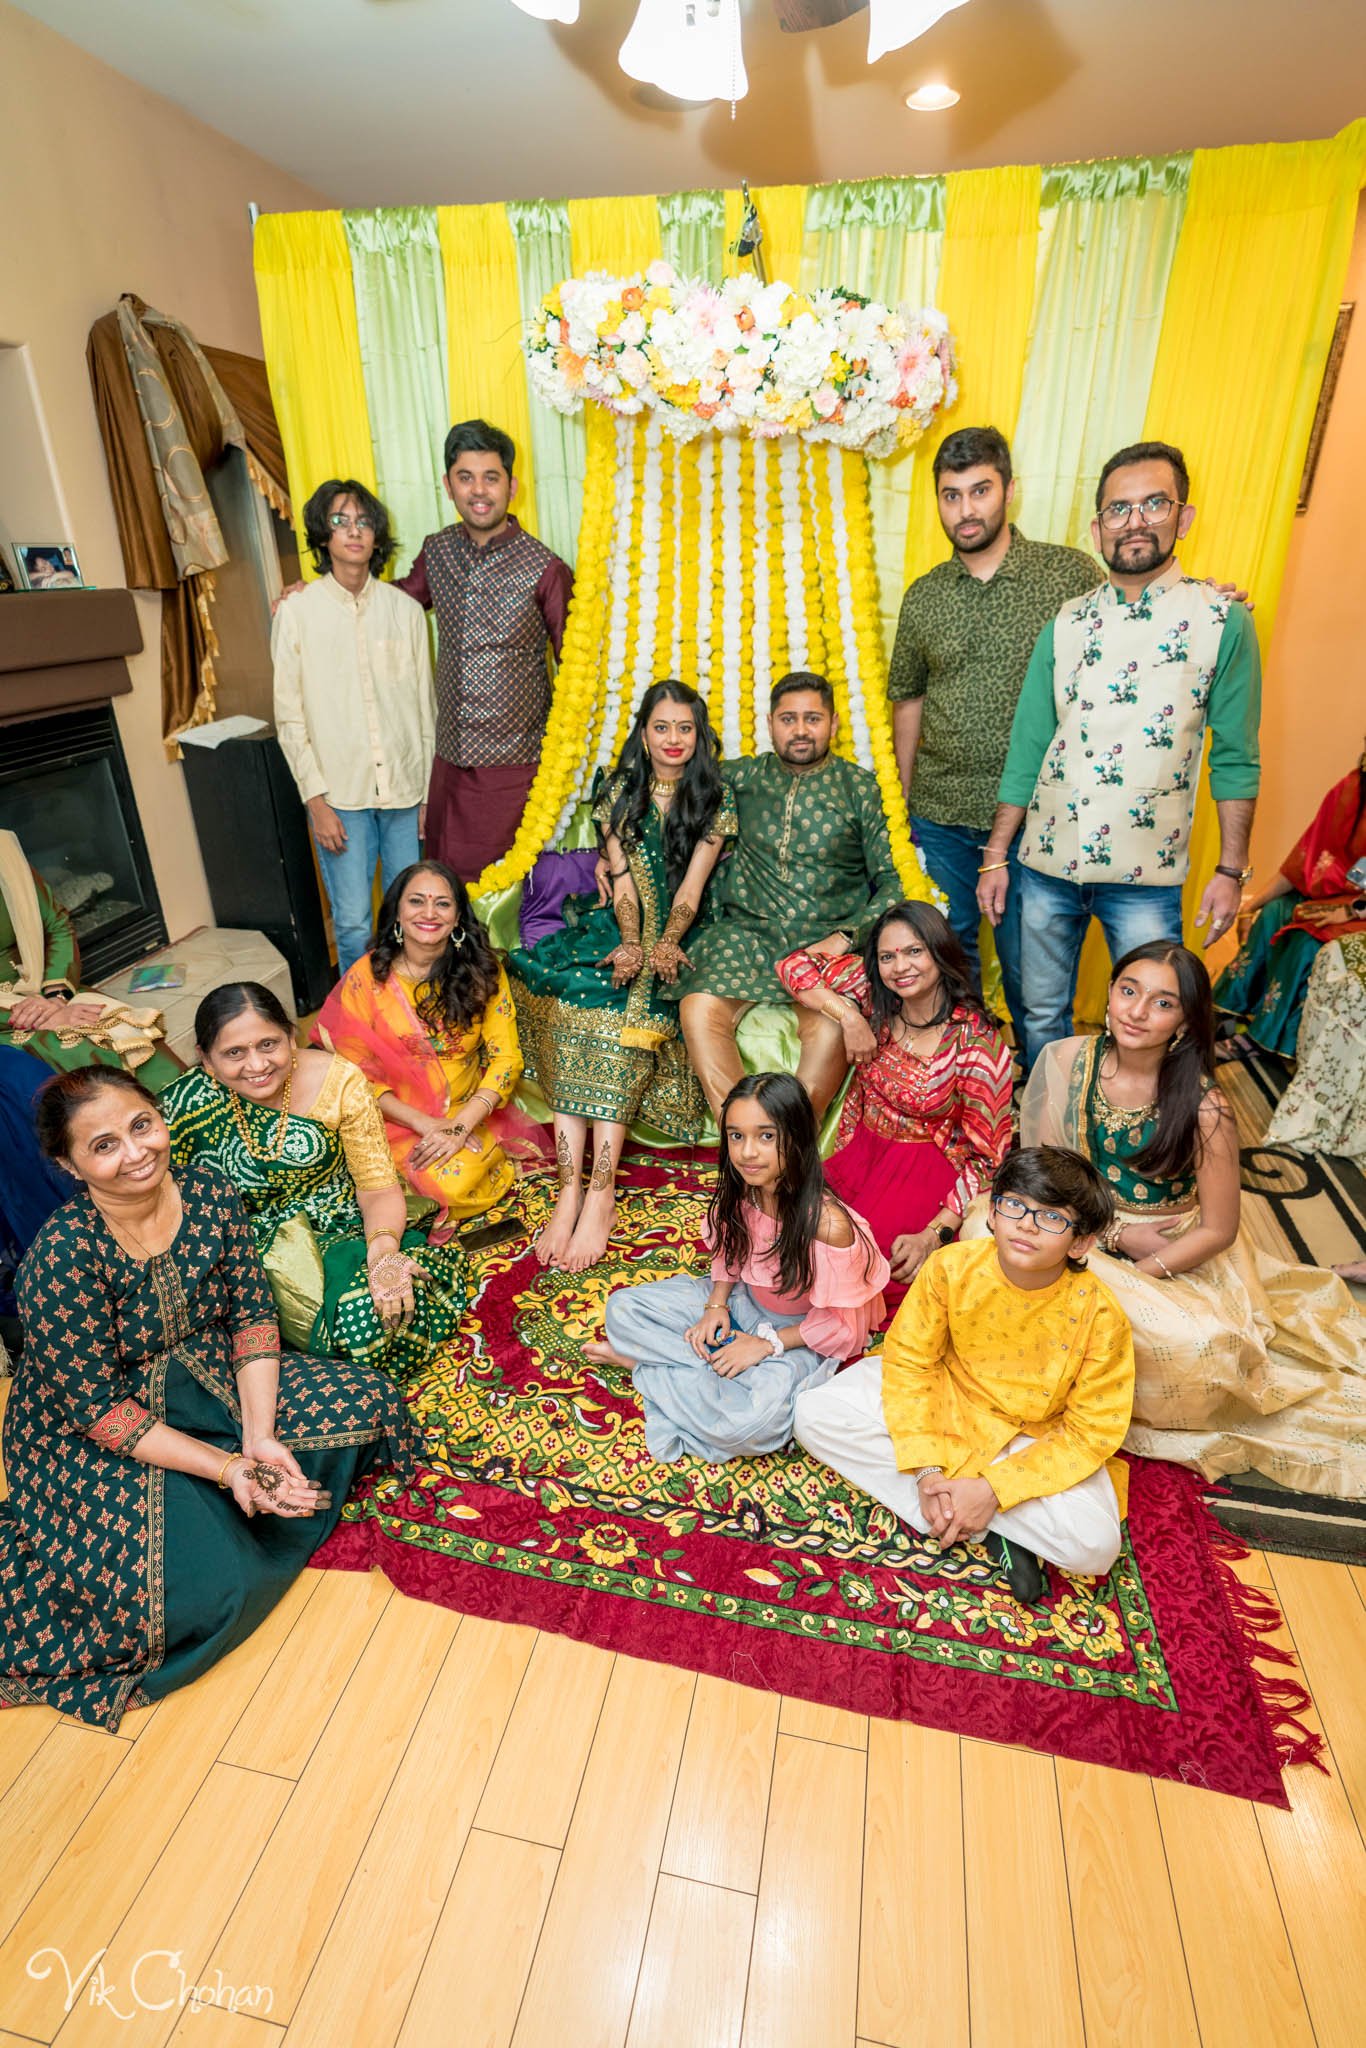 2022-02-03-Hely-&-Parth-Mendi-Indian-Wedding-Vik-Chohan-Photography-Photo-Booth-Social-Media-VCP-116.jpg